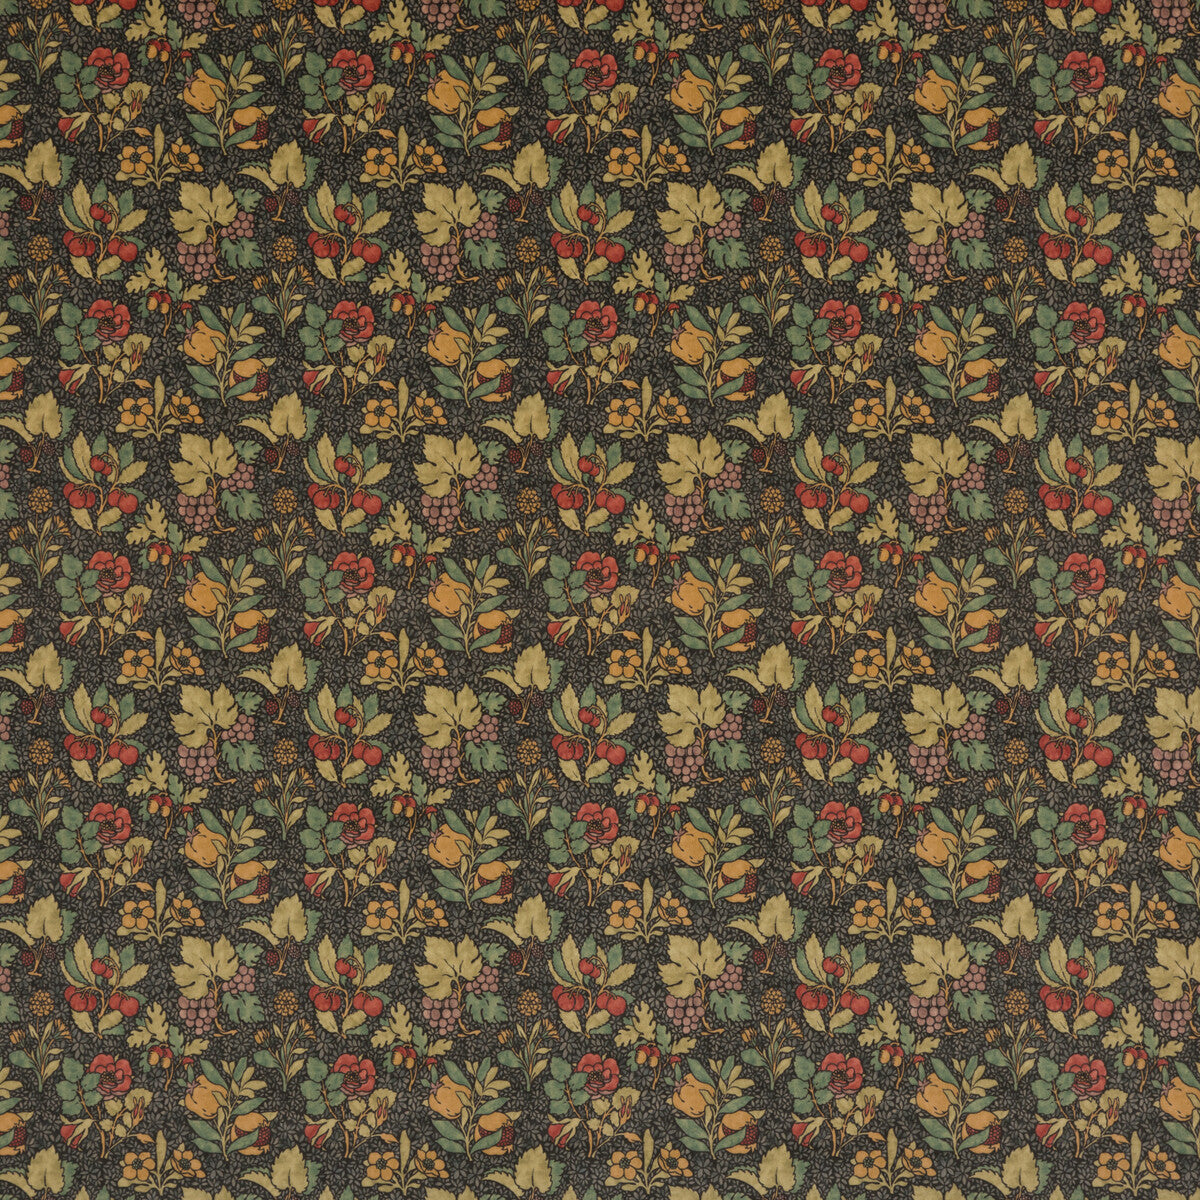 Meadow Fruit Velvet fabric in cinder/multi color - pattern BP10624.1.0 - by G P &amp; J Baker in the Originals V collection